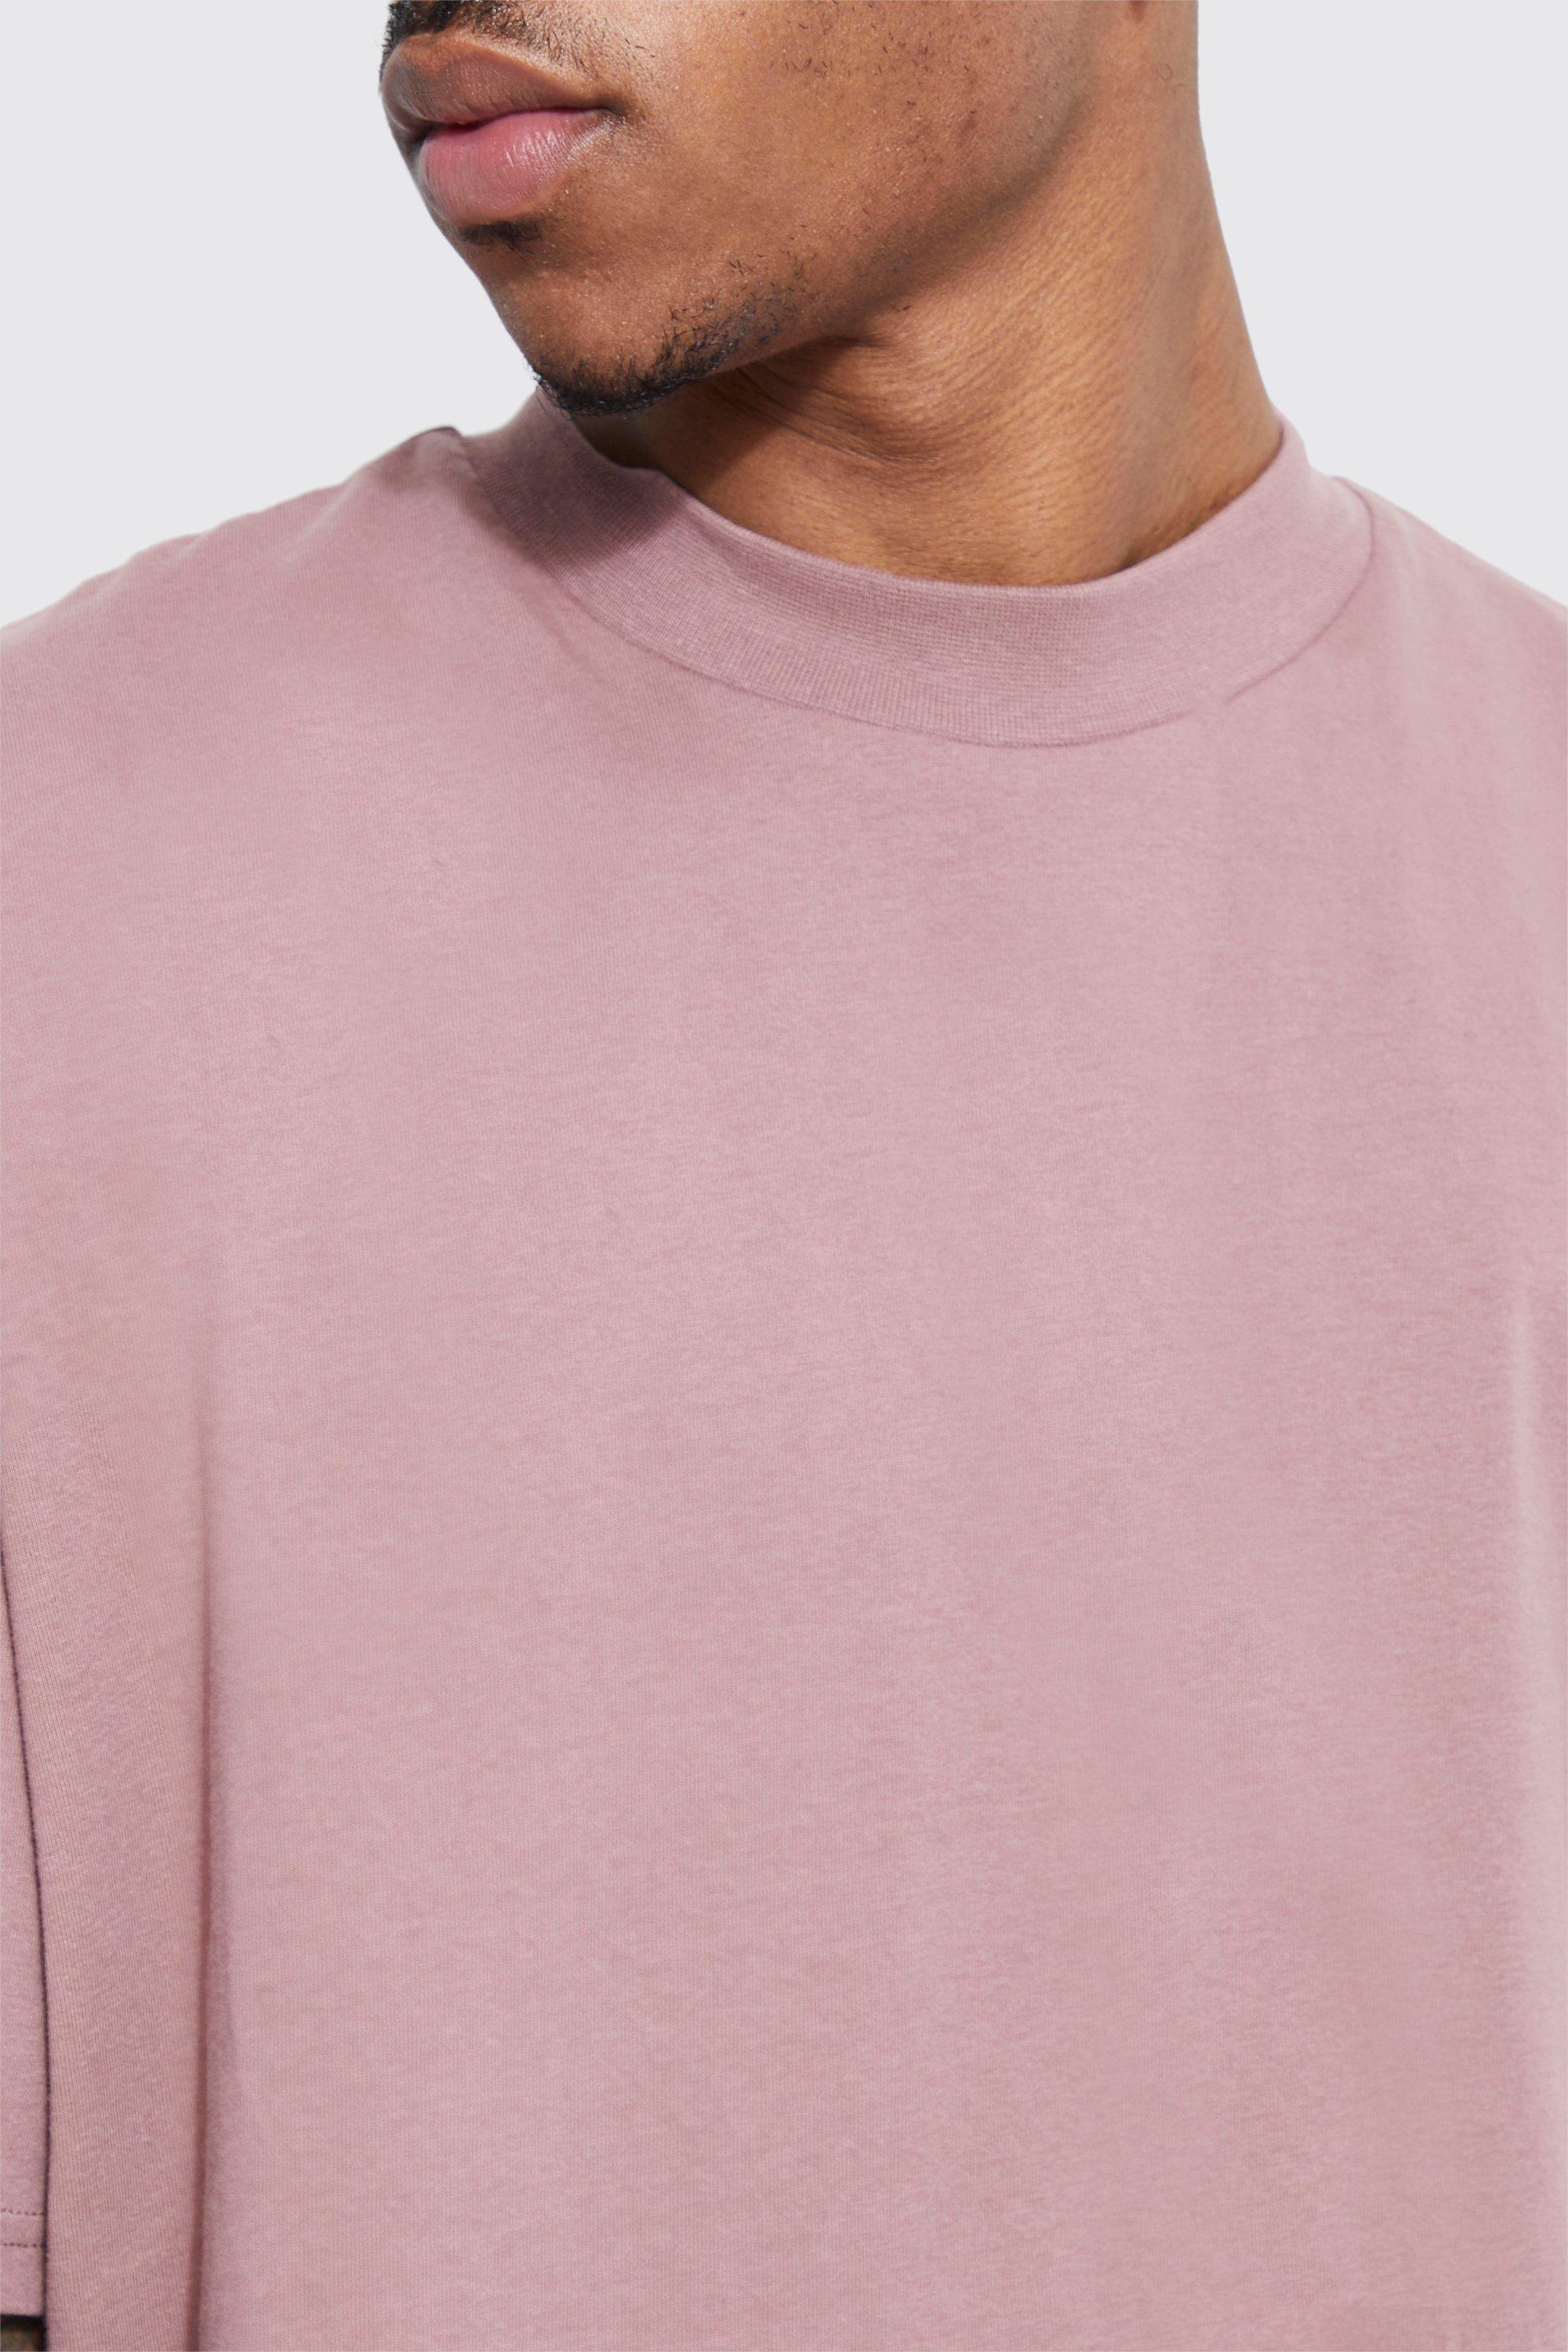 wearing a blank oversized heavy cotton blank pink t-shirt